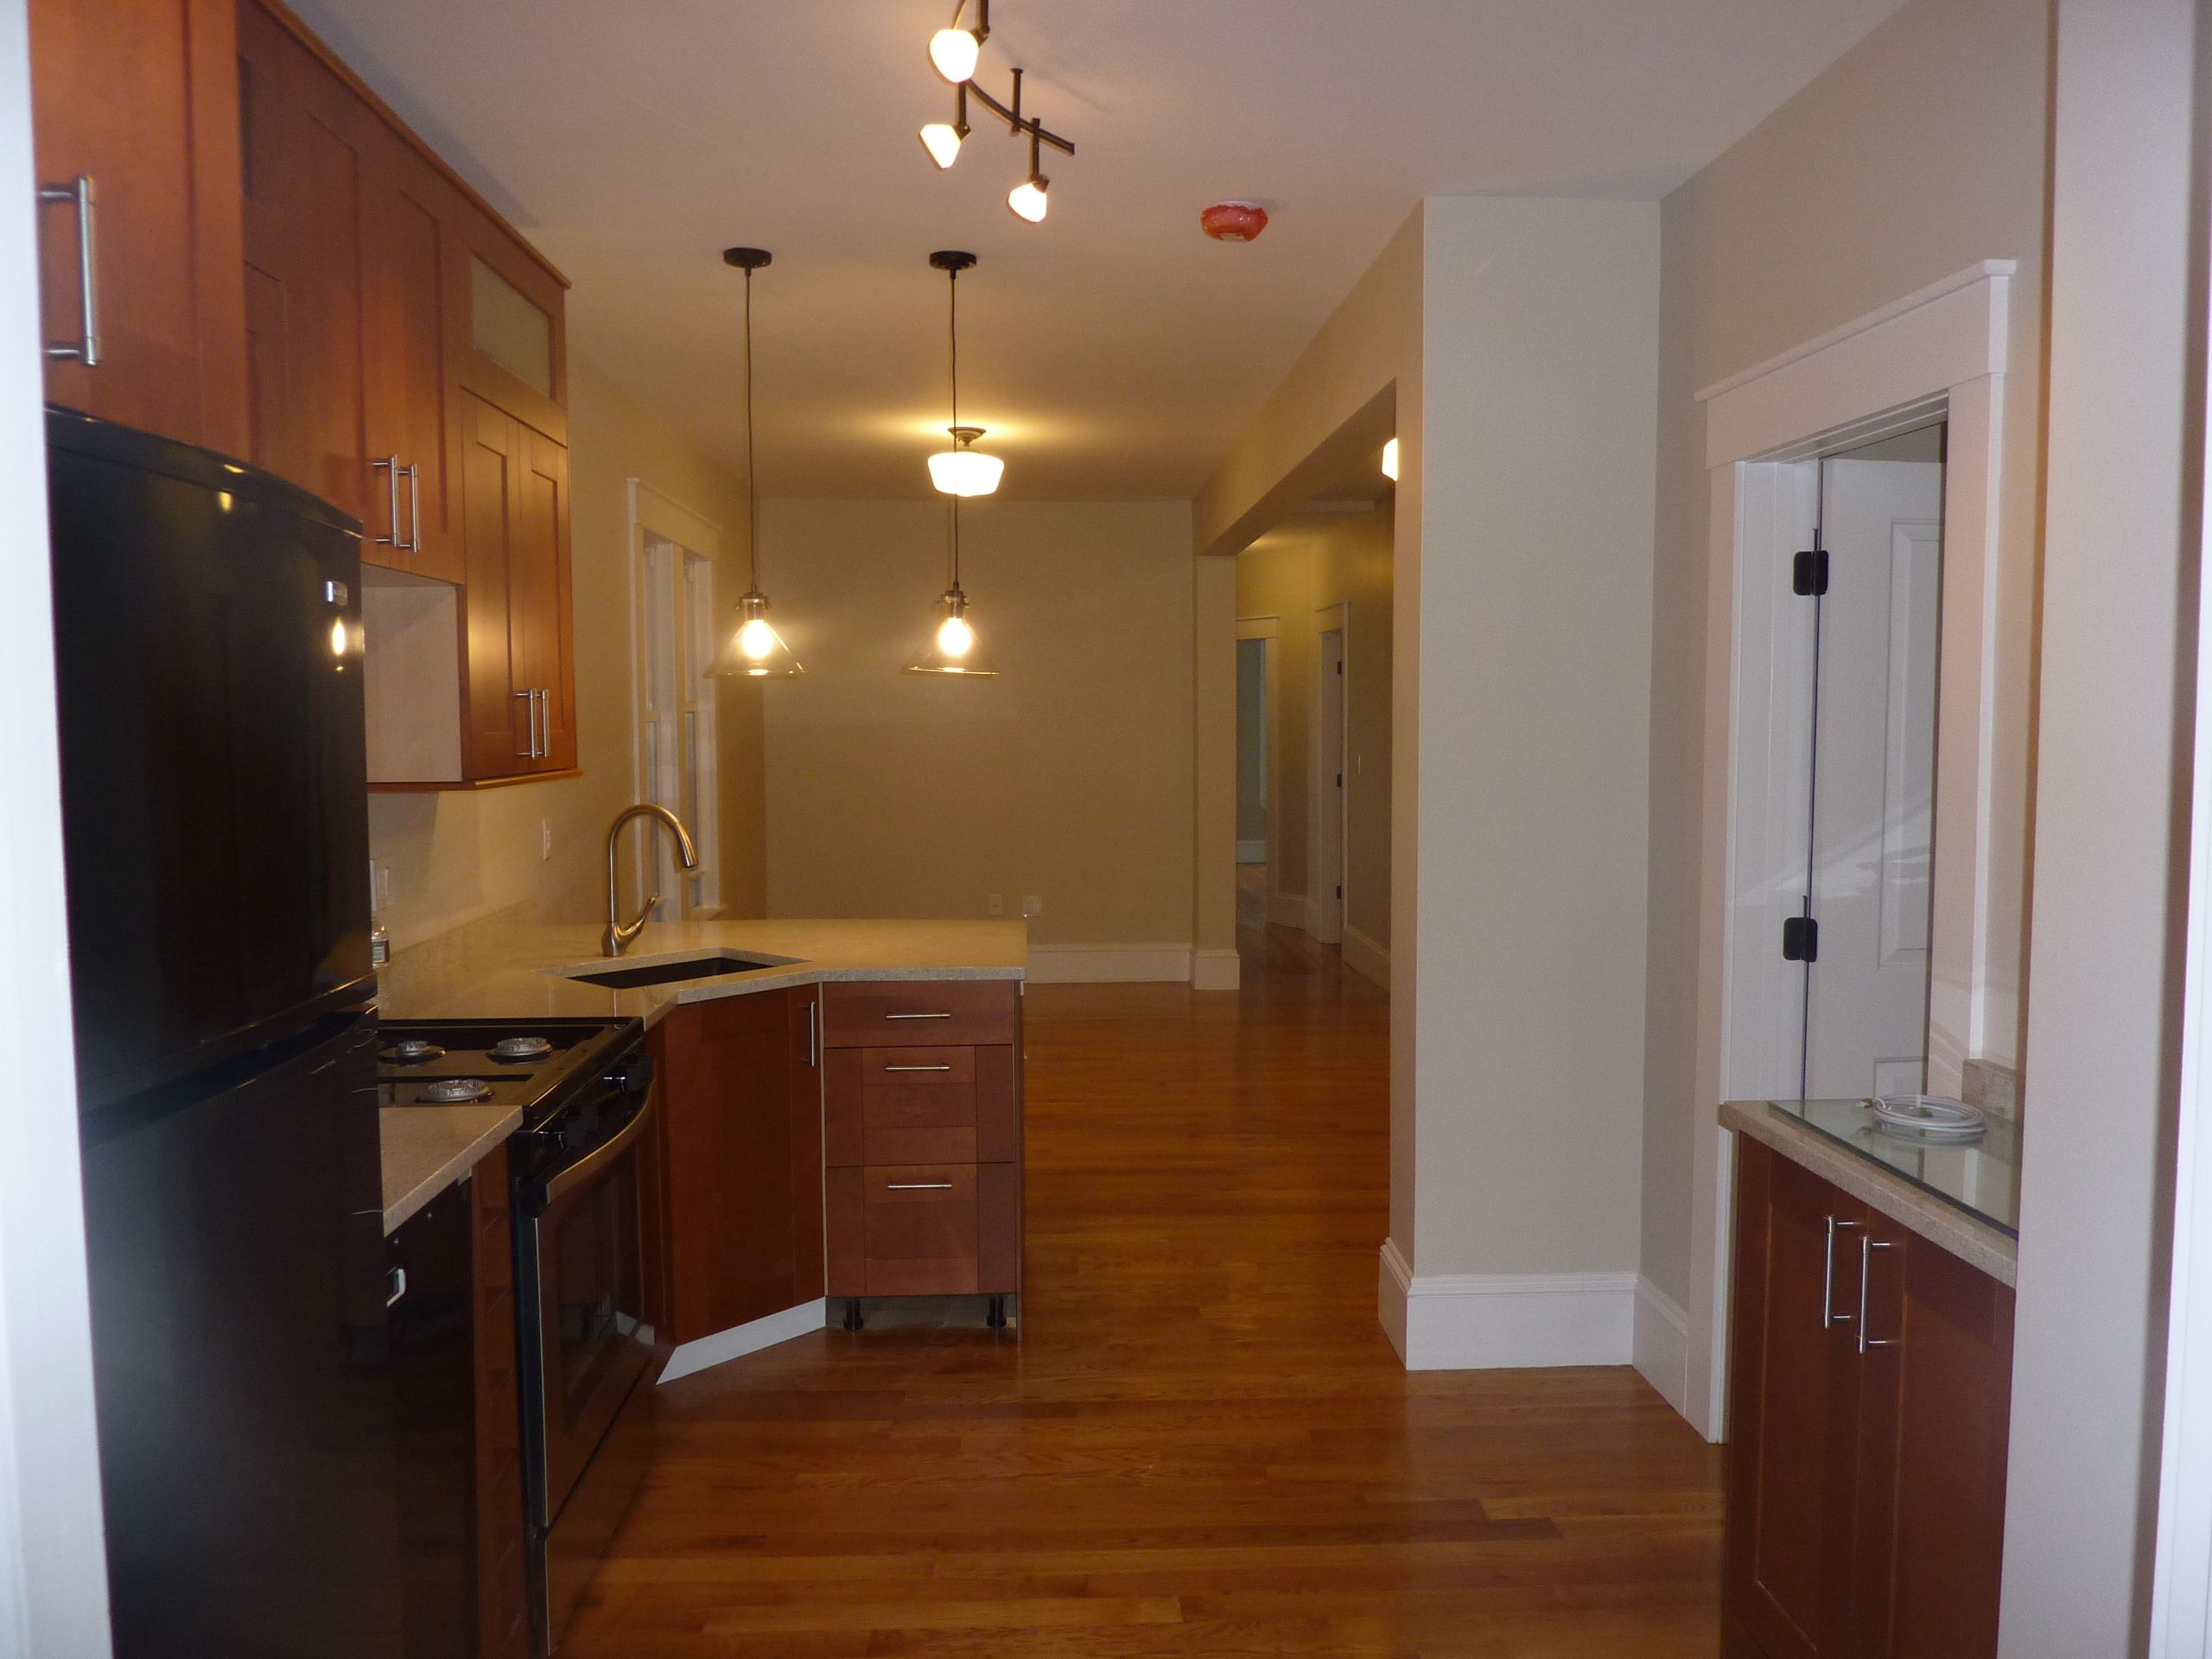 Photos of apartment on Cottage St.,Boston MA 02128